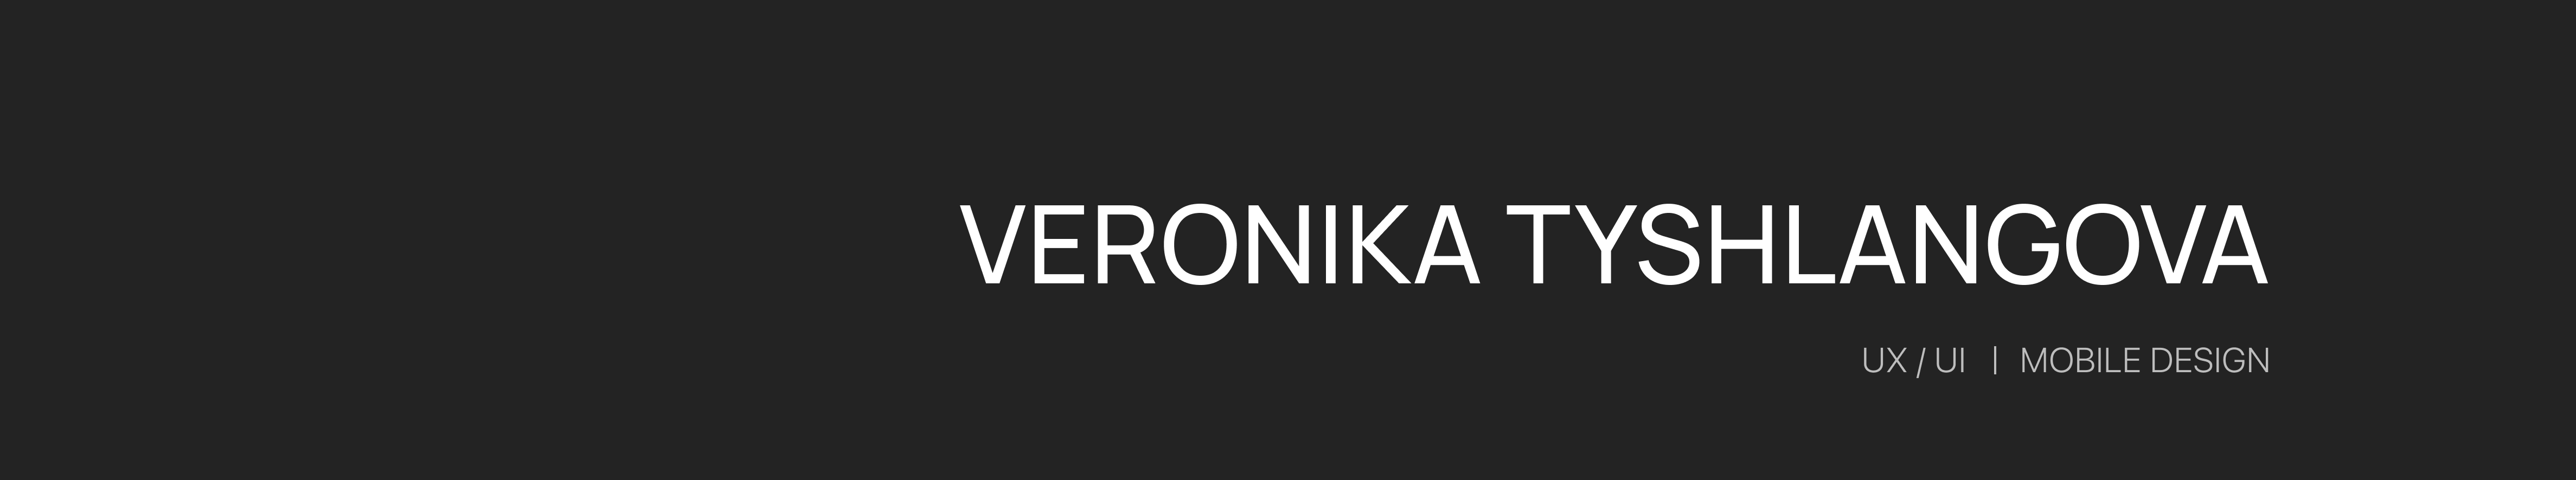 Veronika Tyshlangova's profile banner